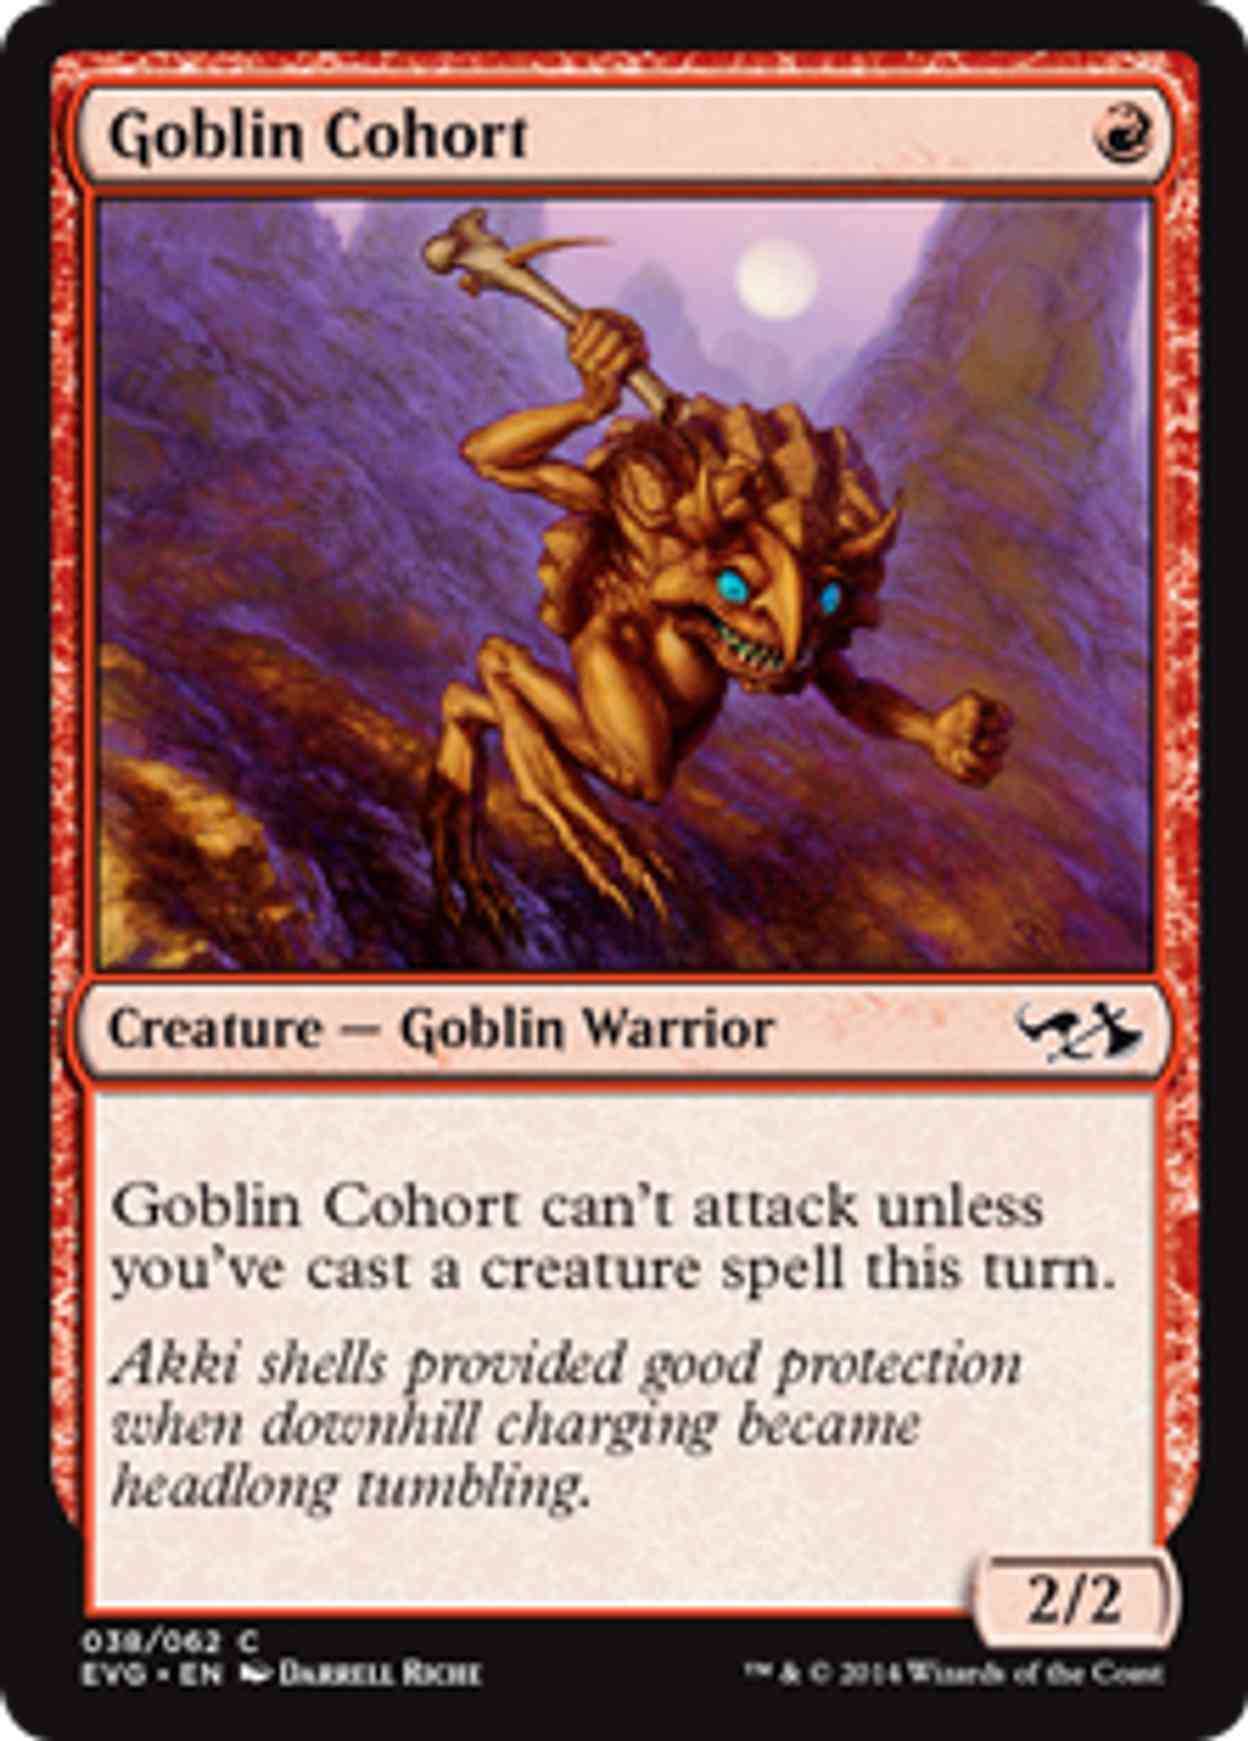 Goblin Cohort magic card front